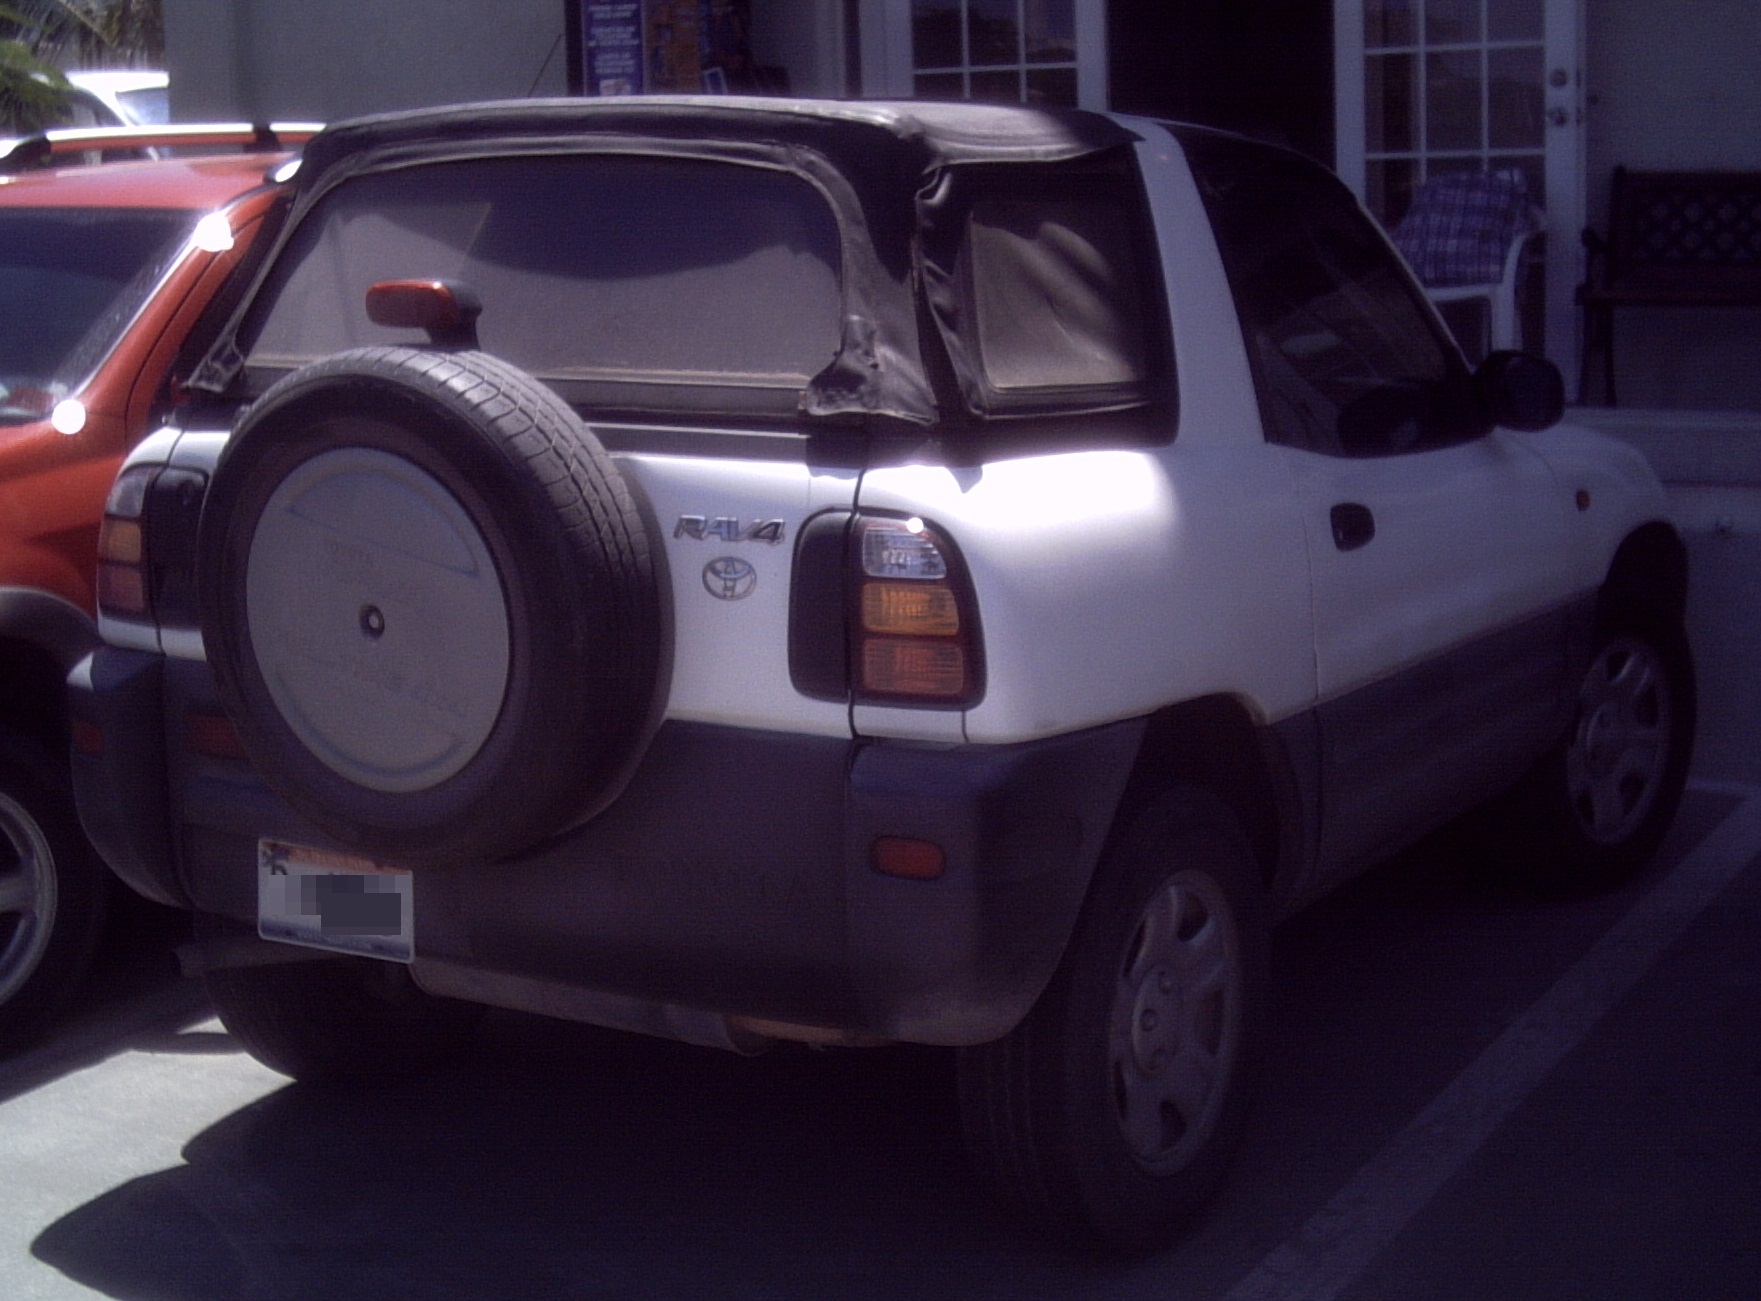 File:'98-'00 Toyota RAV4 Convertible -- Rear.JPG - Wikimedia Commons